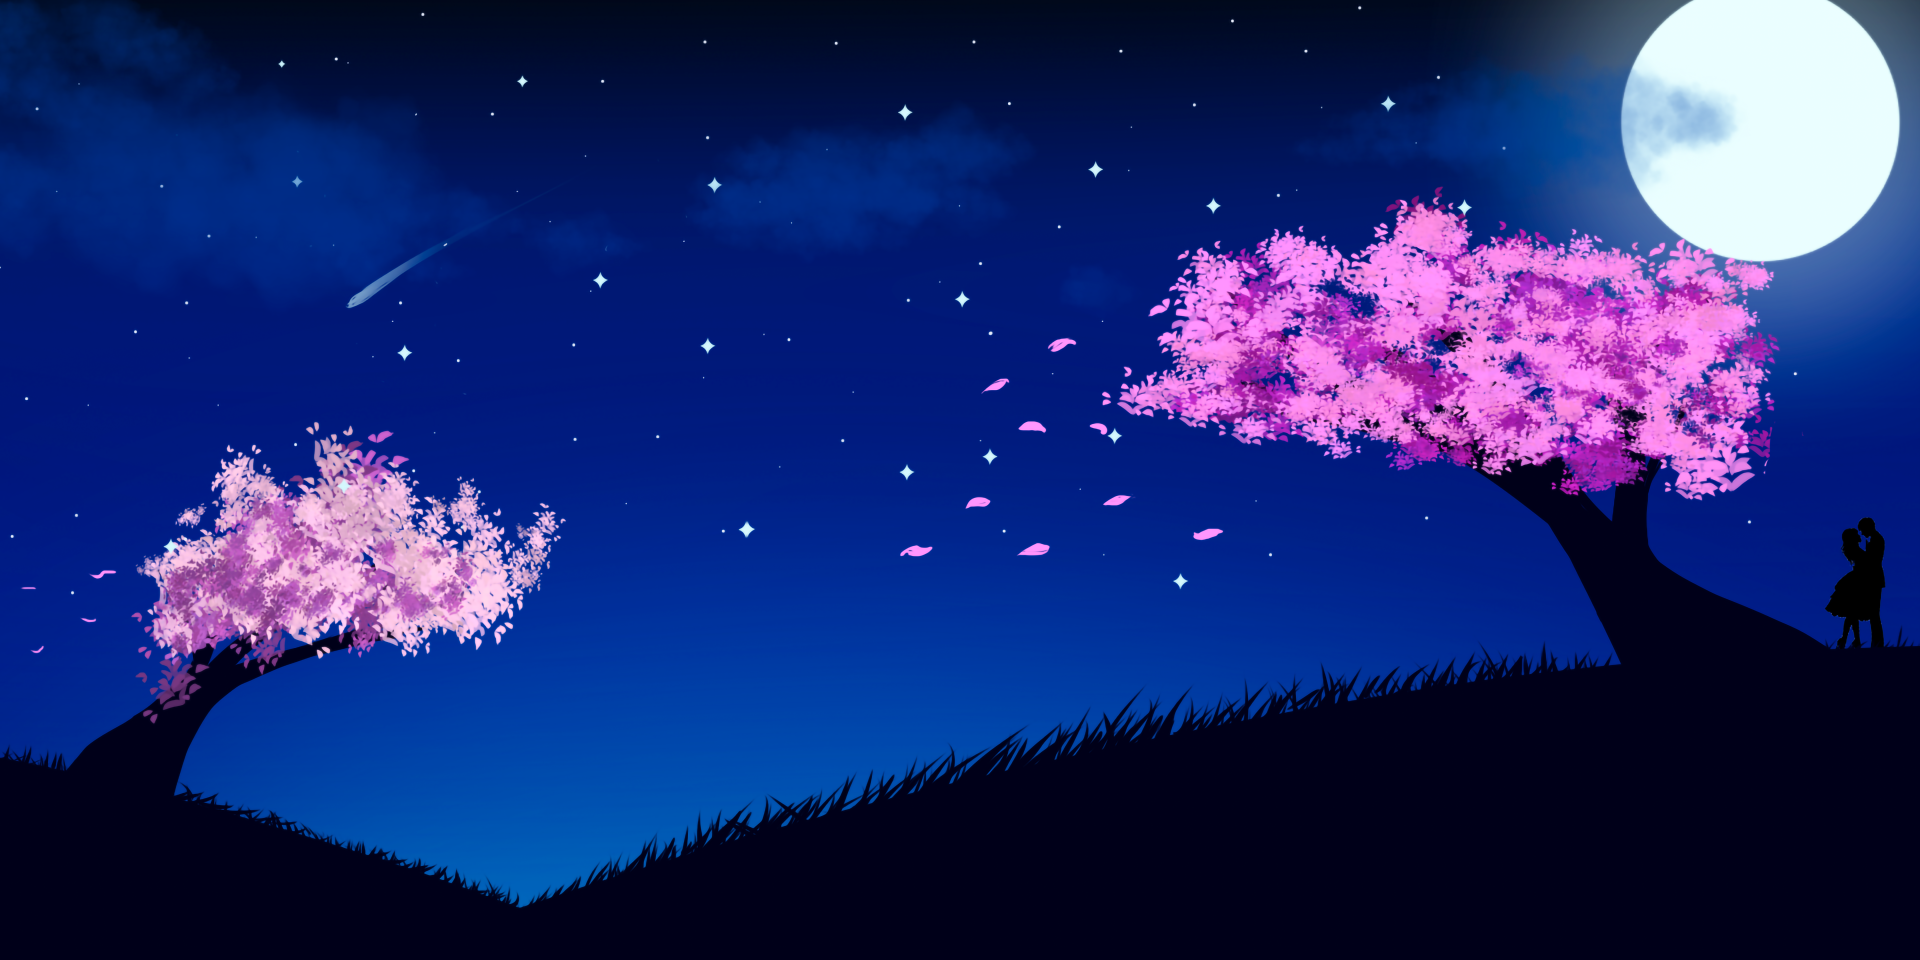 Cherry Blossom 8k Ultra HD Wallpaper | Background Image | 8640x4320